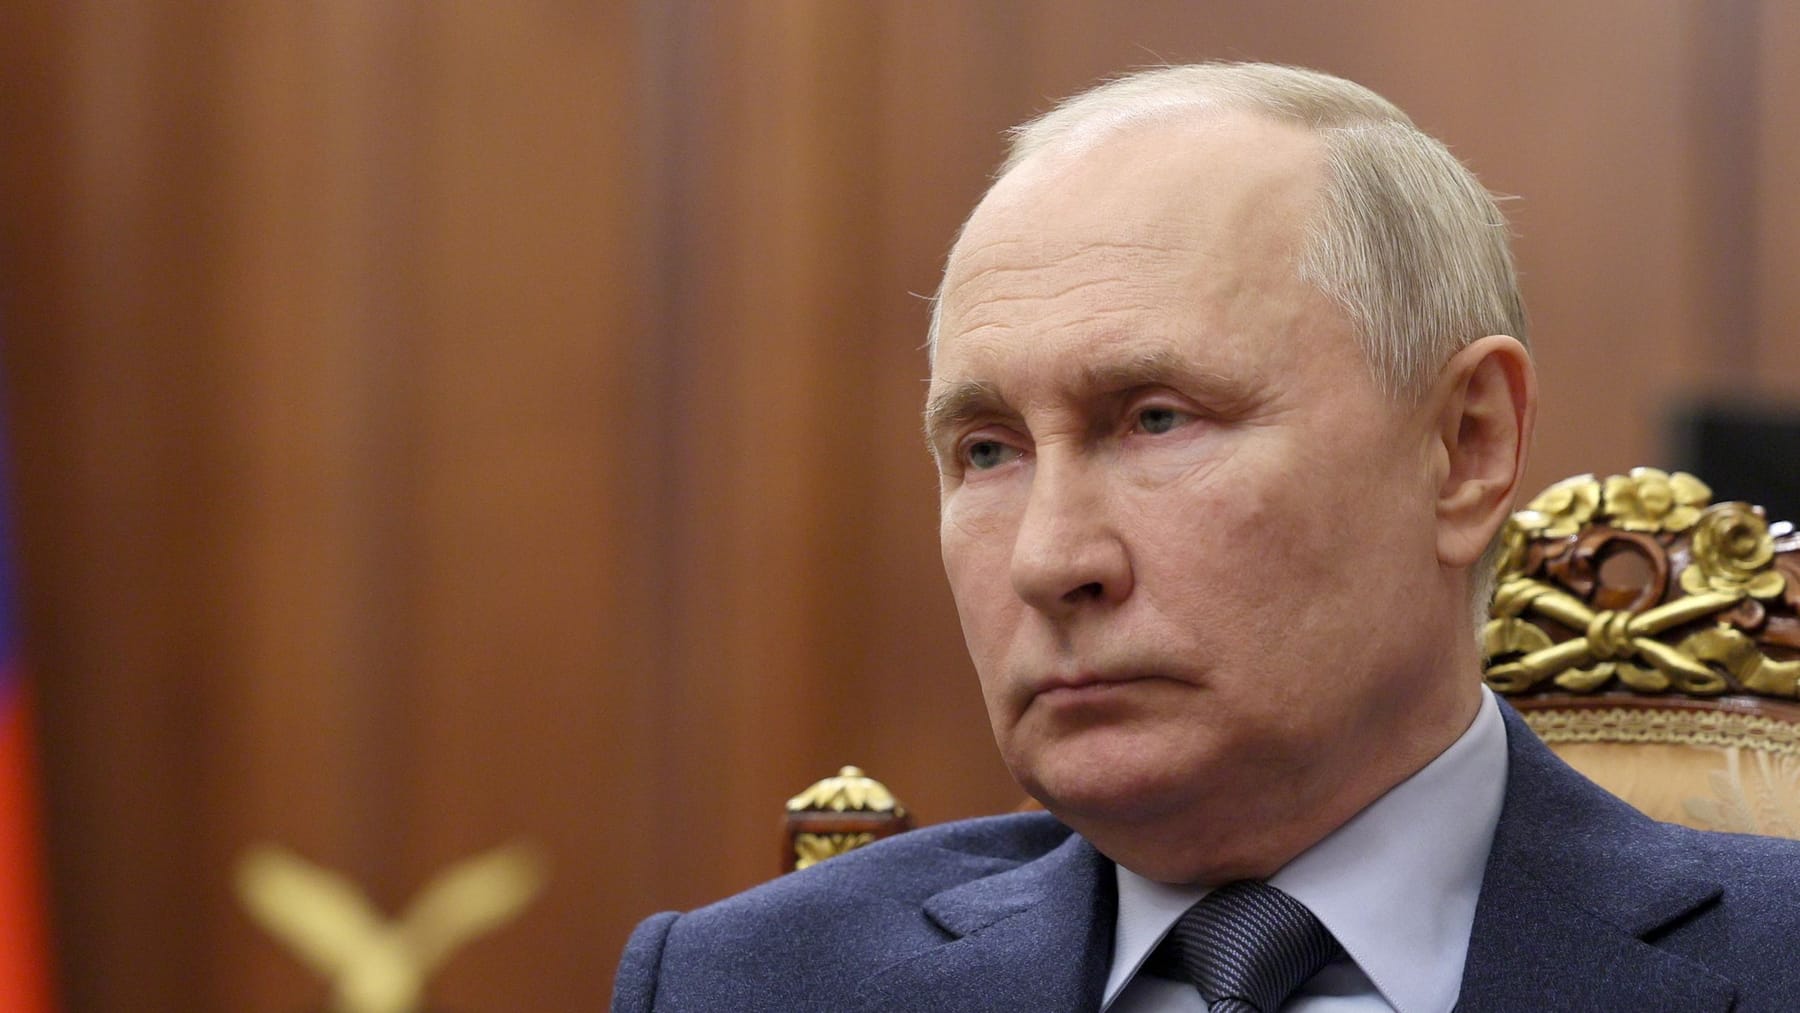 Guerra |  Encuesta: El apoyo a la guerra de Putin ha disminuido significativamente